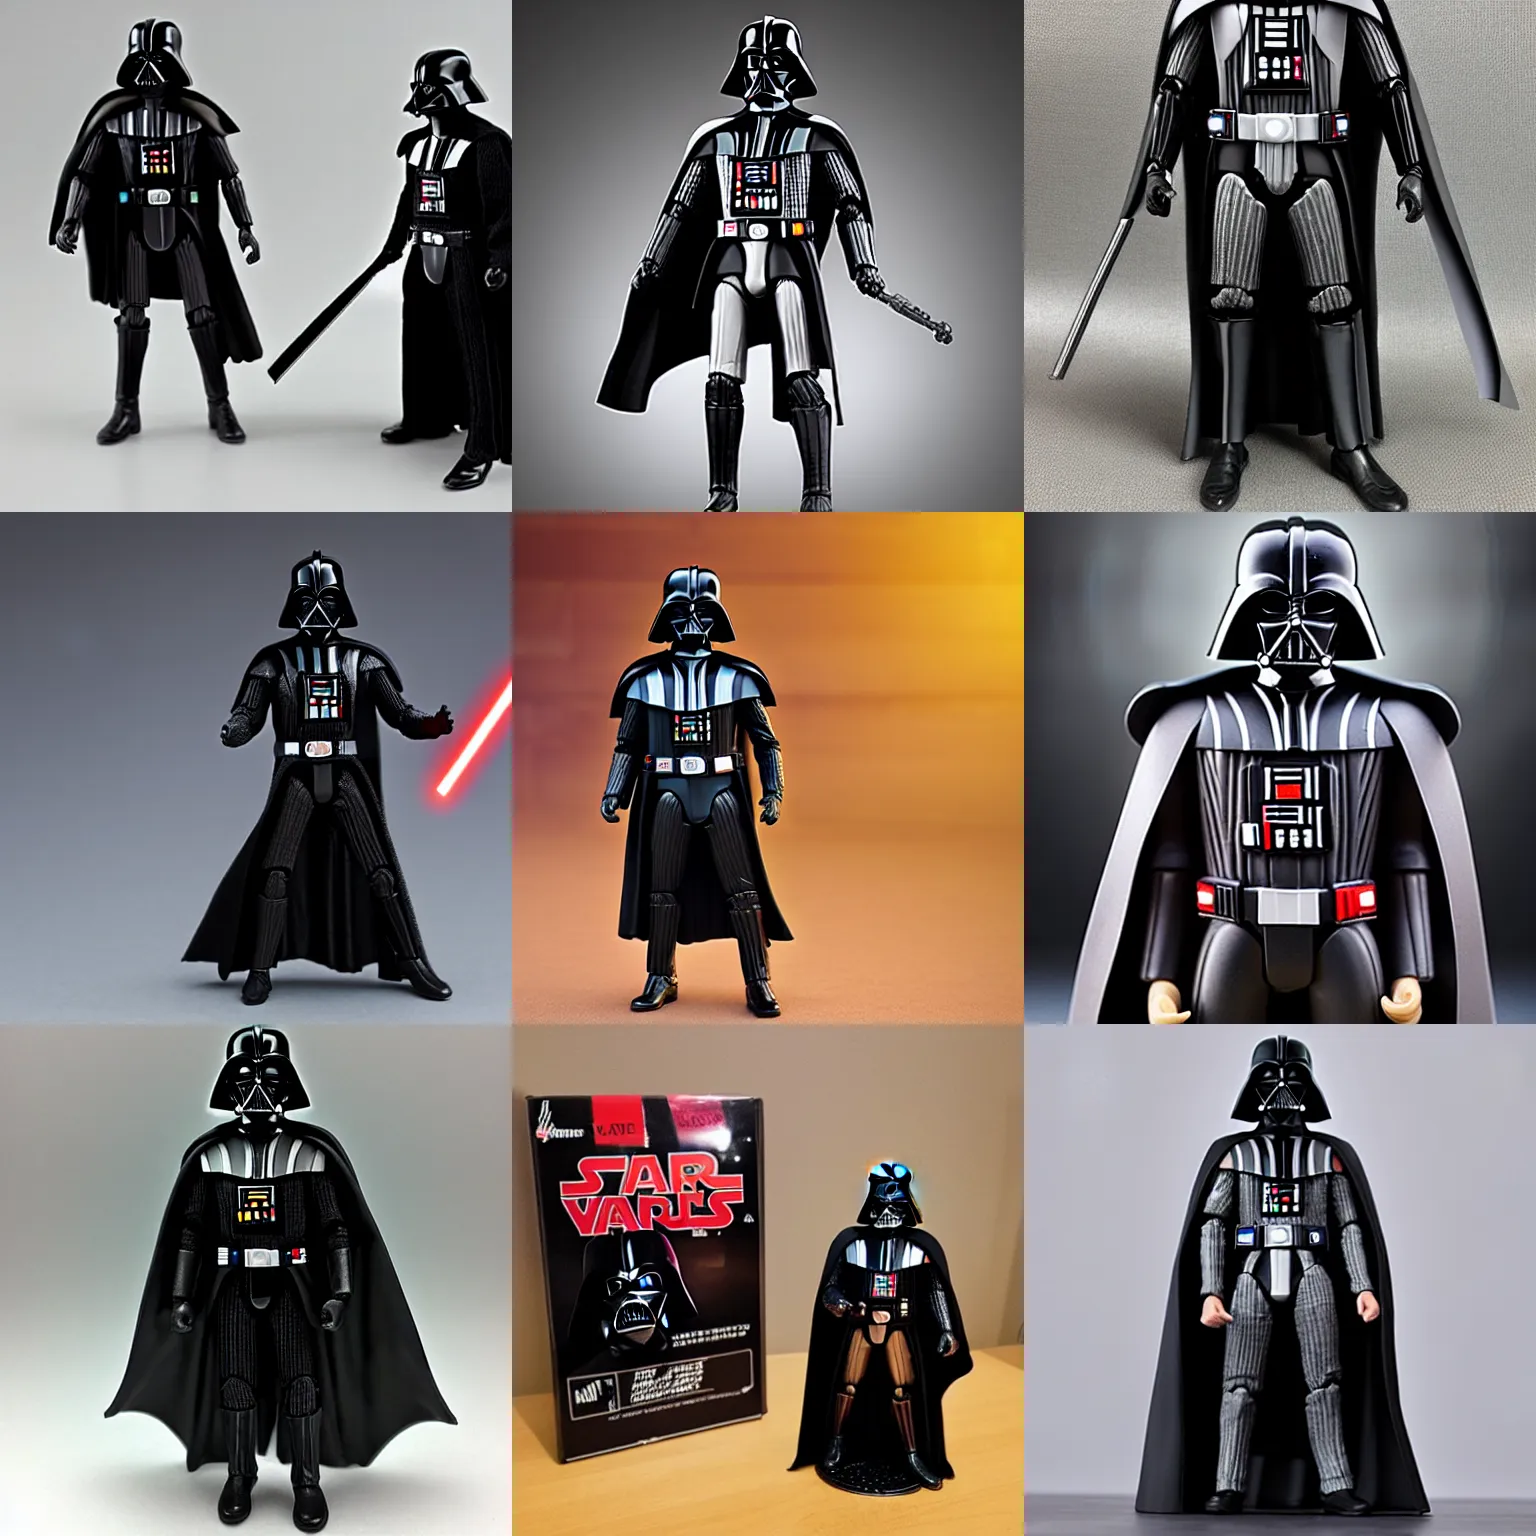 Prompt: Action figure of Darth Vader